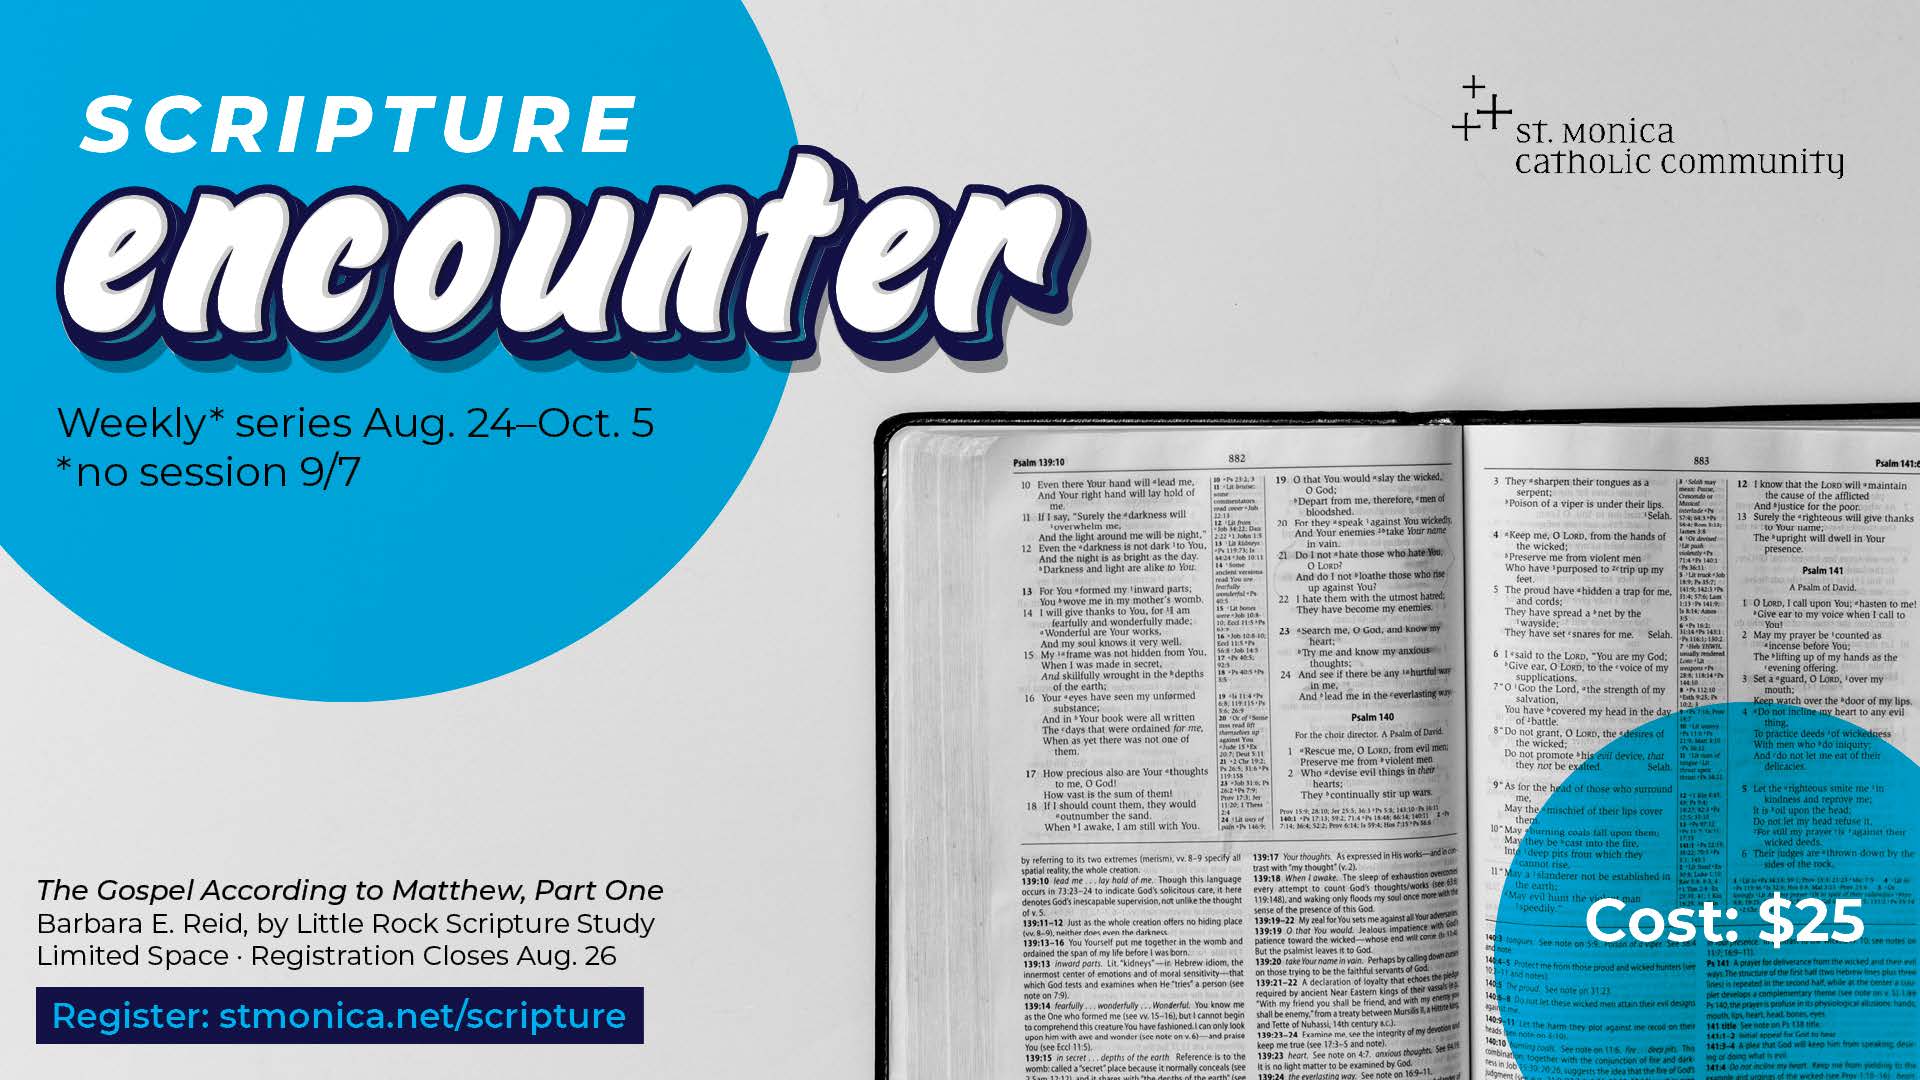 786967 scripture encounter key 200824 2 073020